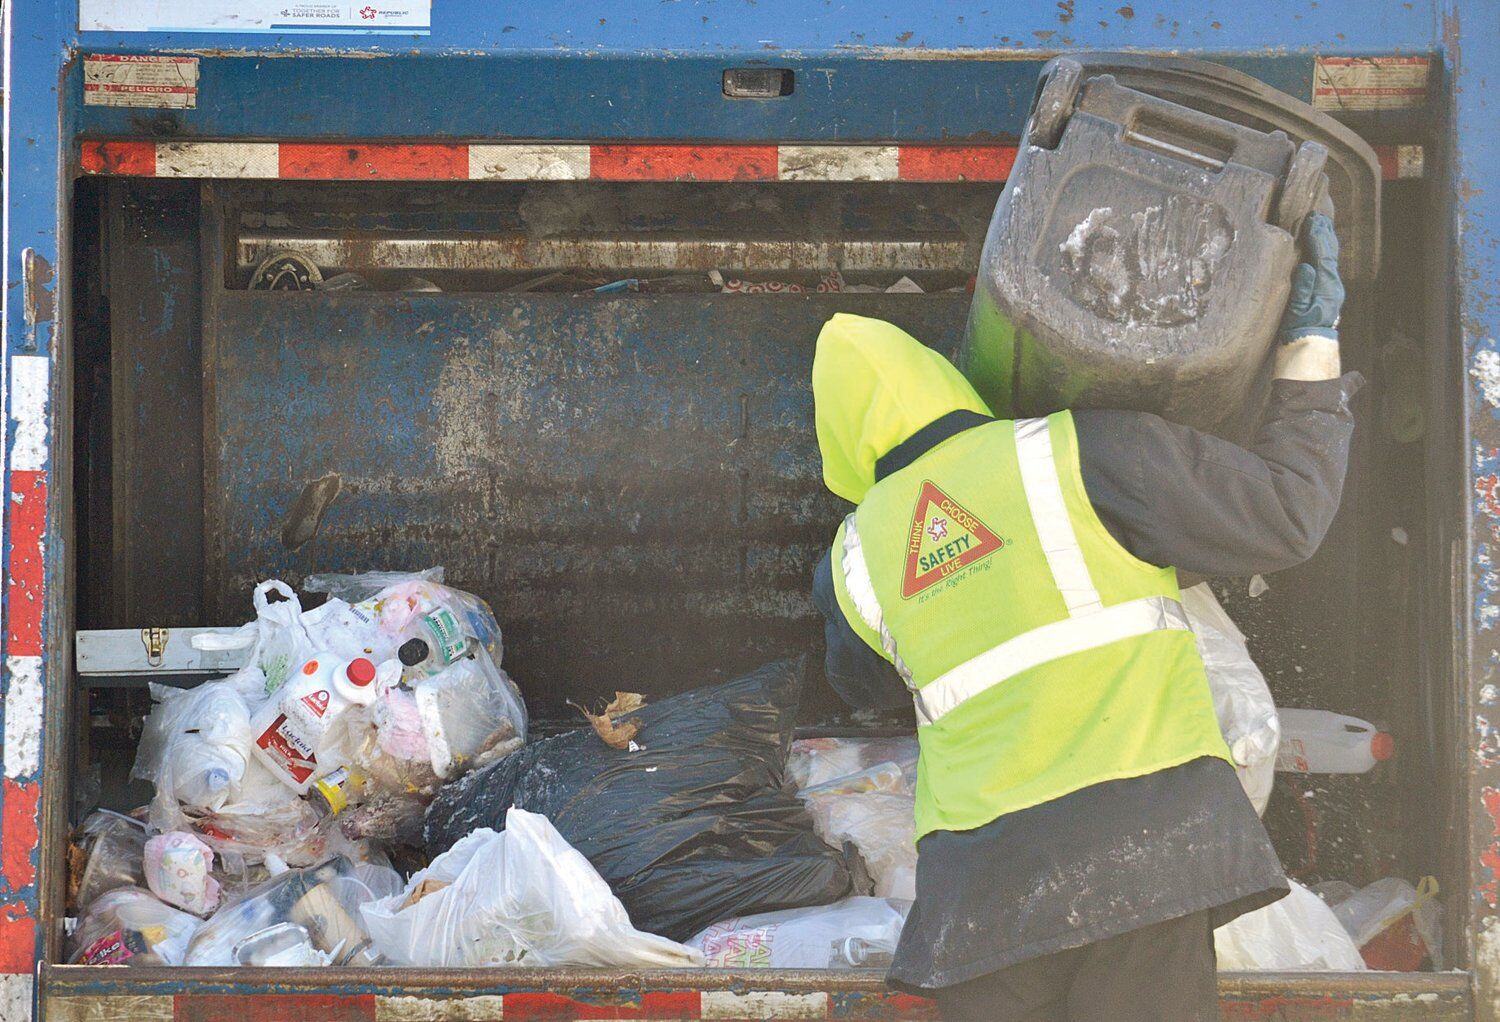 pittsfield township yard waste pickup